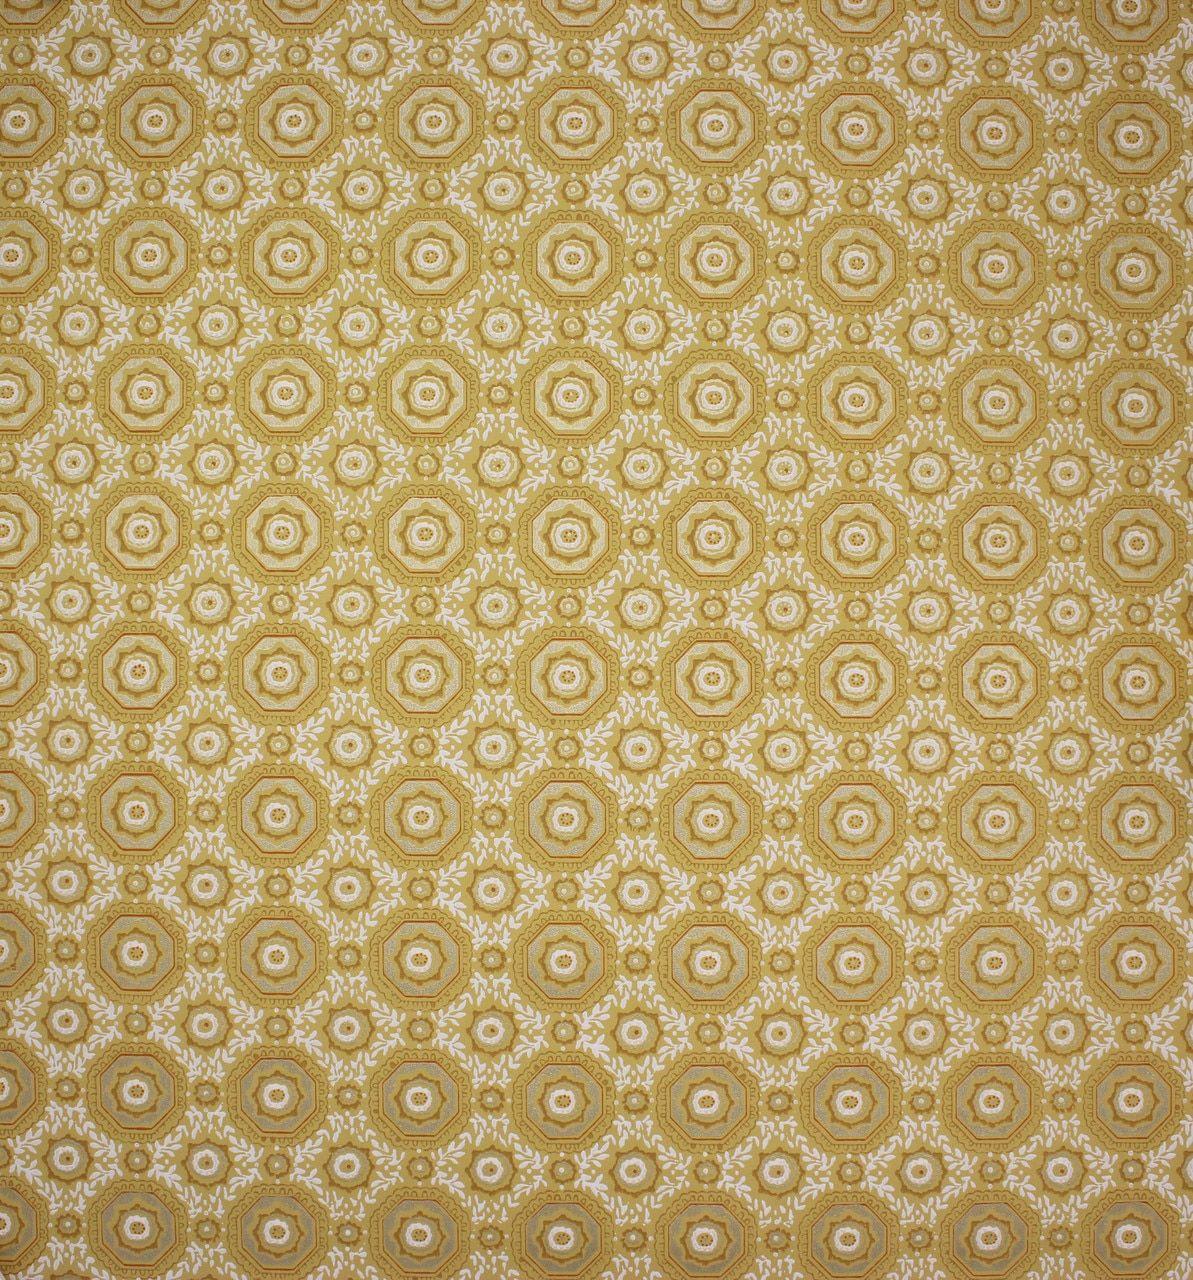 1950s wallpaper  1950s wallpaper Mid century modern design Retro  wallpaper